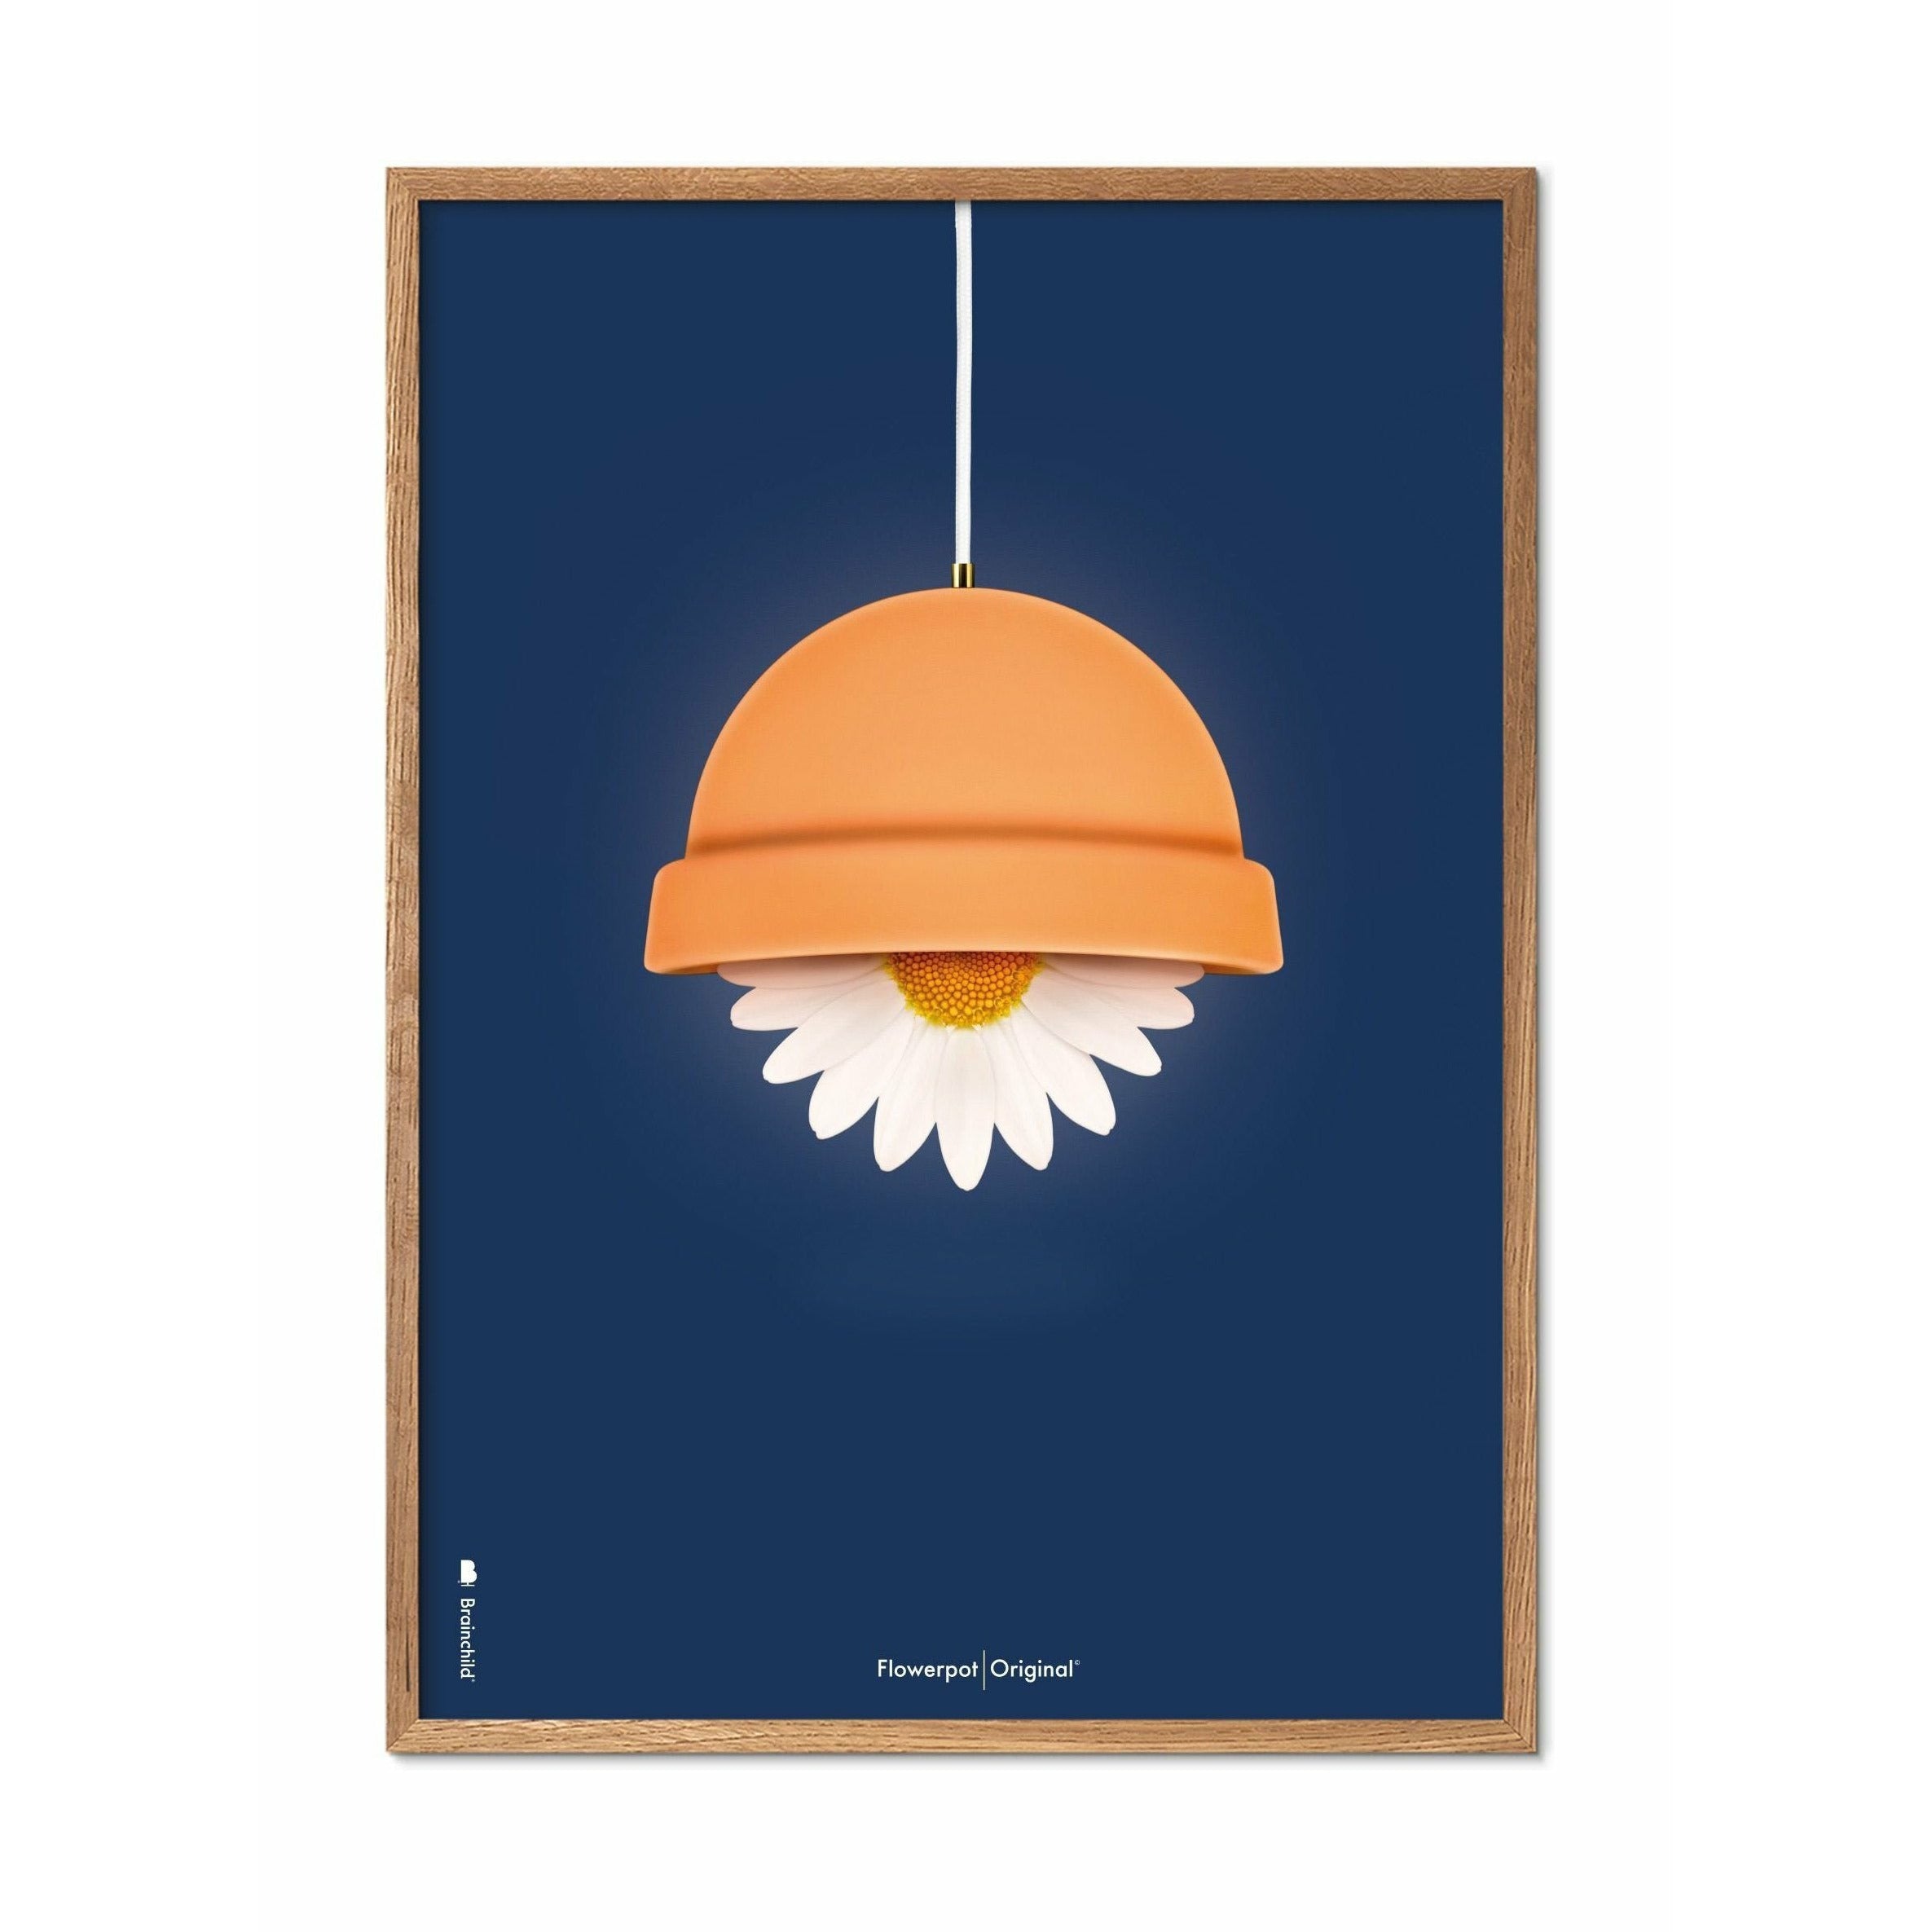 Brainchild Flowerpot Classic Poster, ram gjord av lätt trä 70x100 cm, mörkblå bakgrund